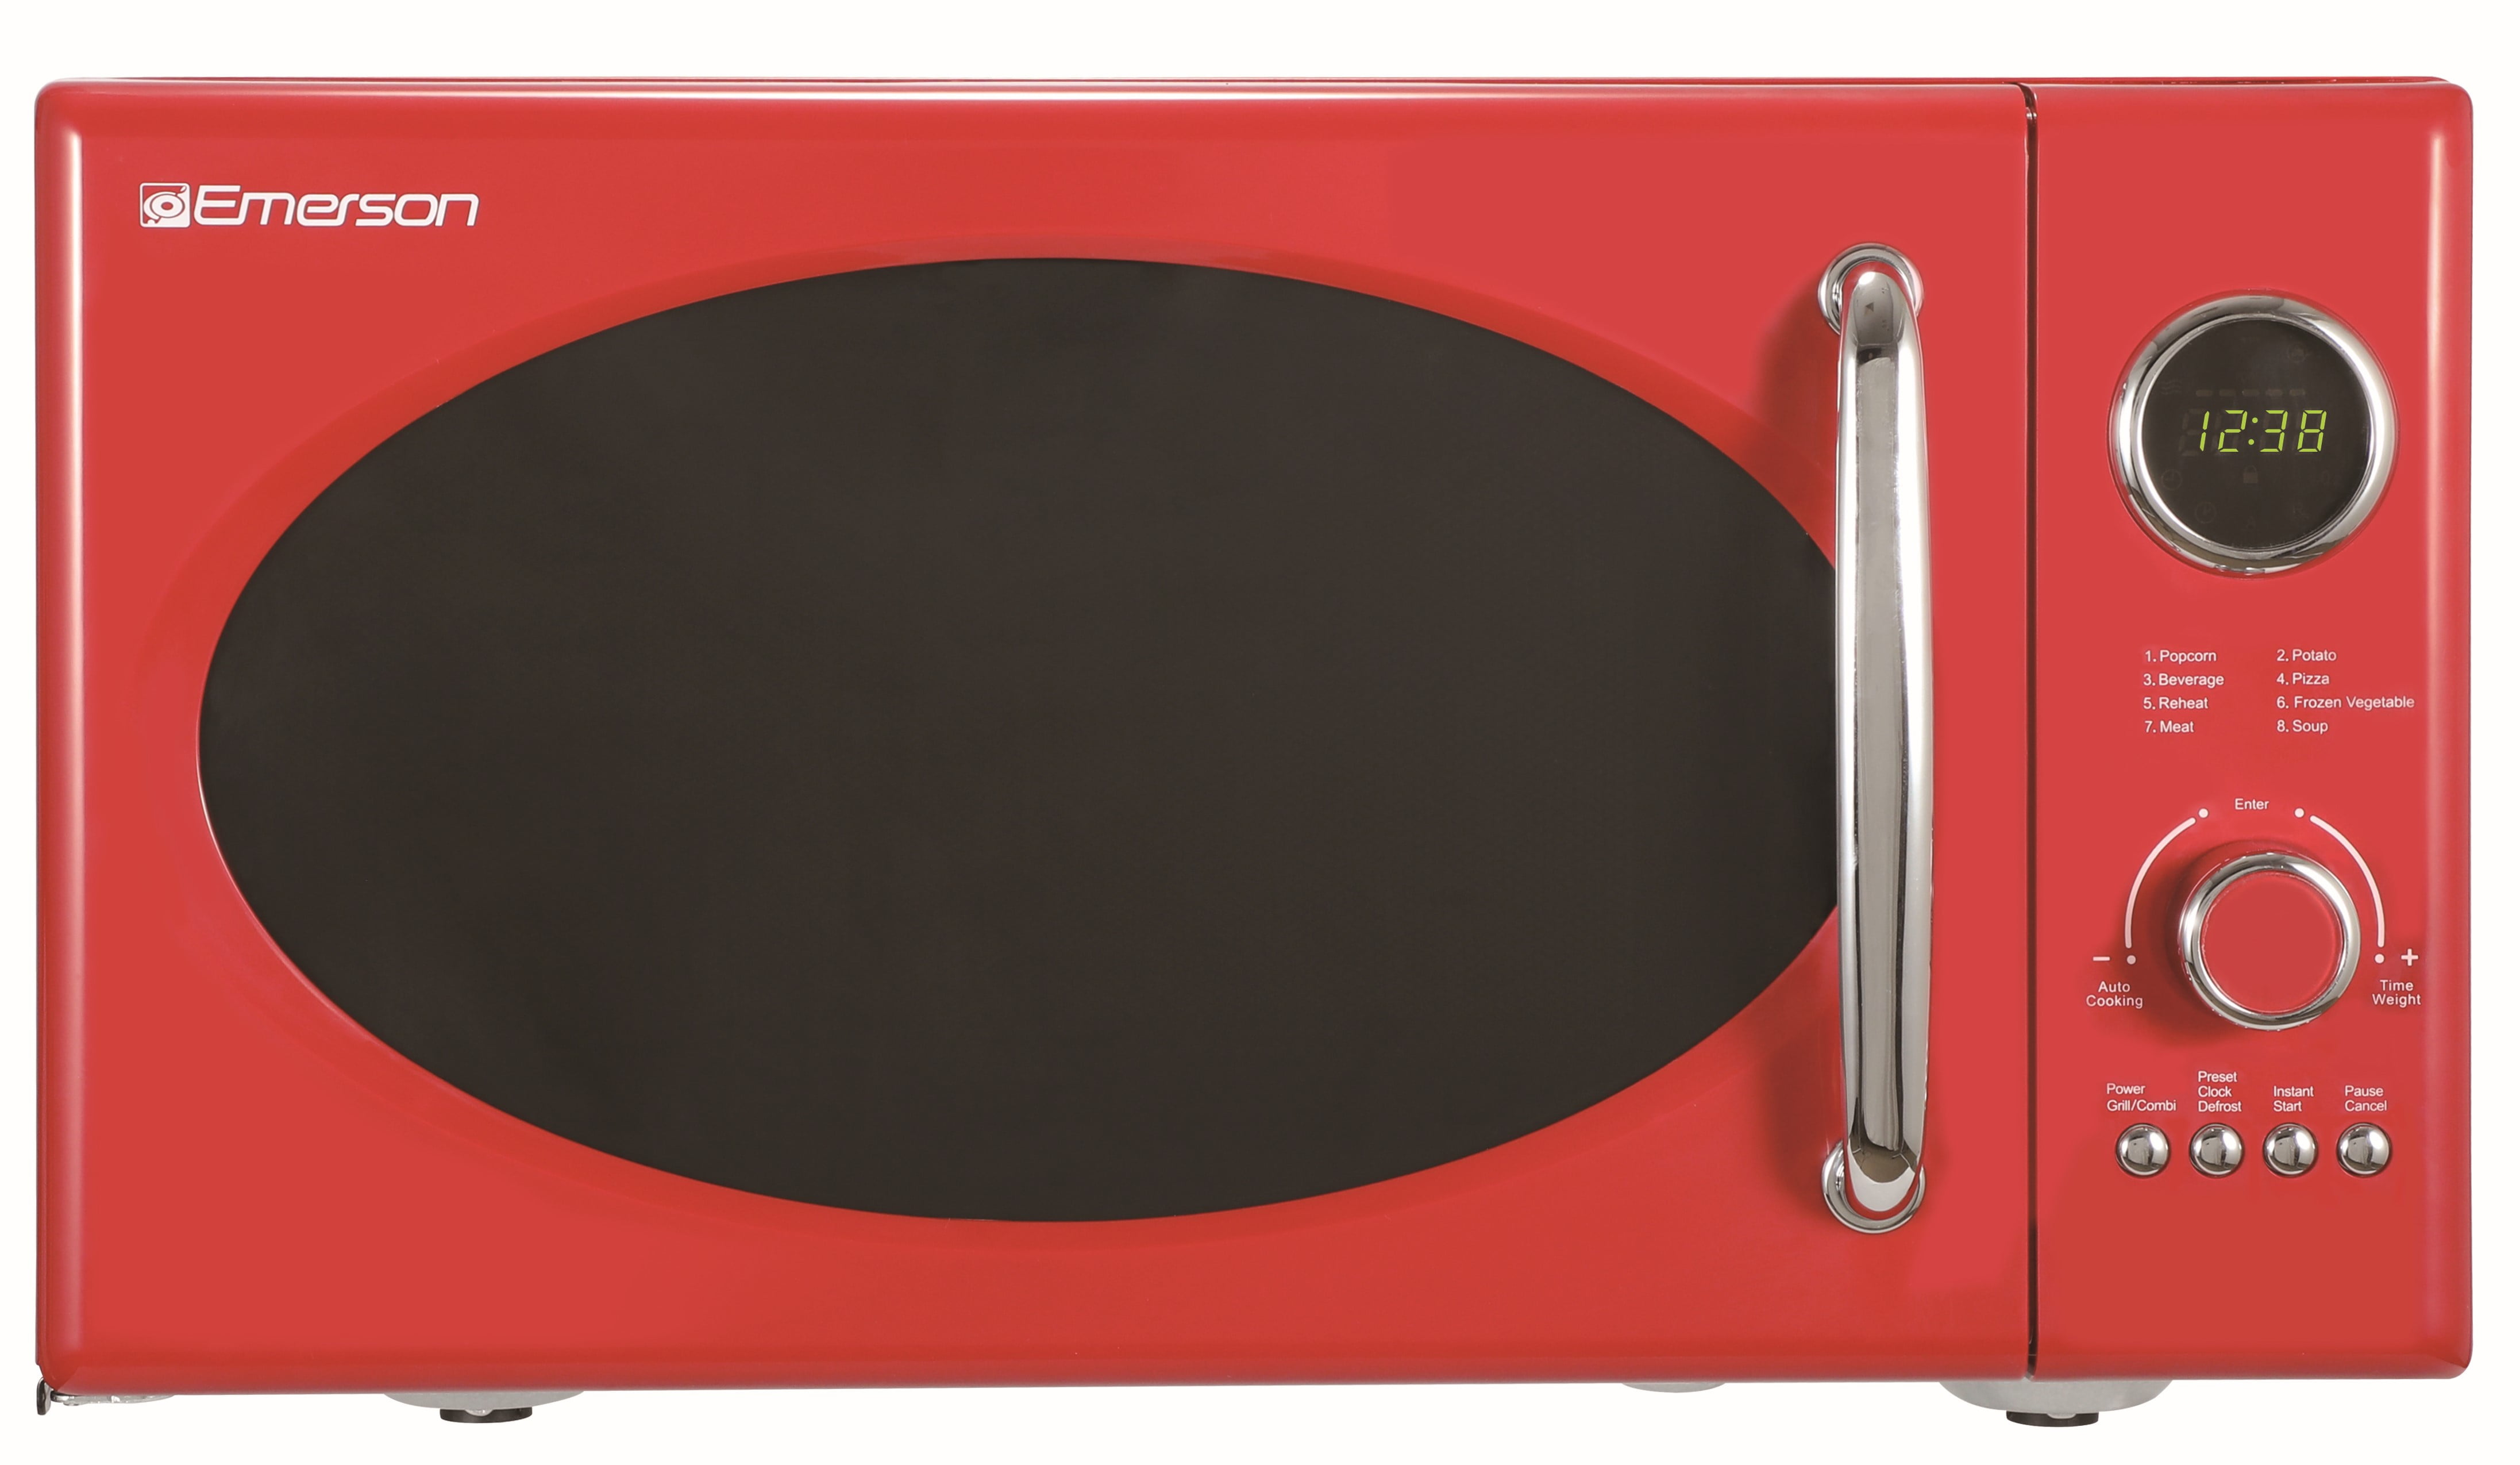 Lékué Microwave Grill - Red (DL 0220400R14M500)